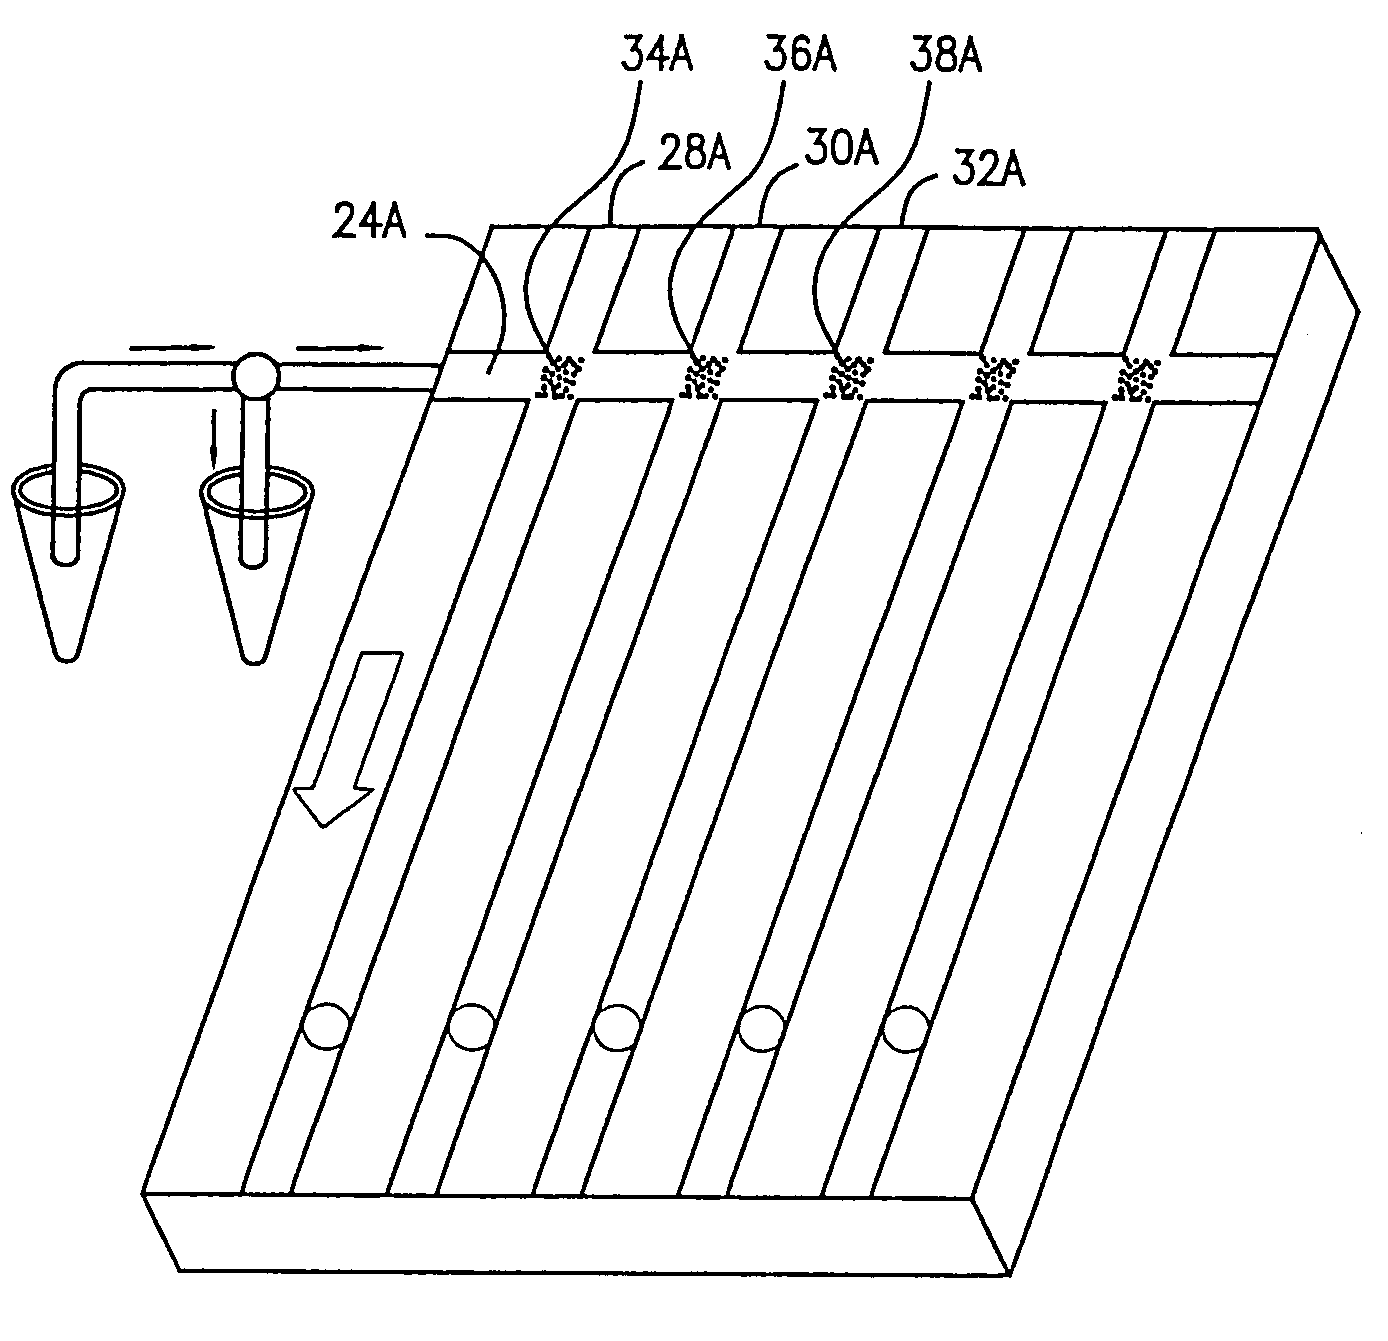 Multi-dimensional electrophoresis apparatus